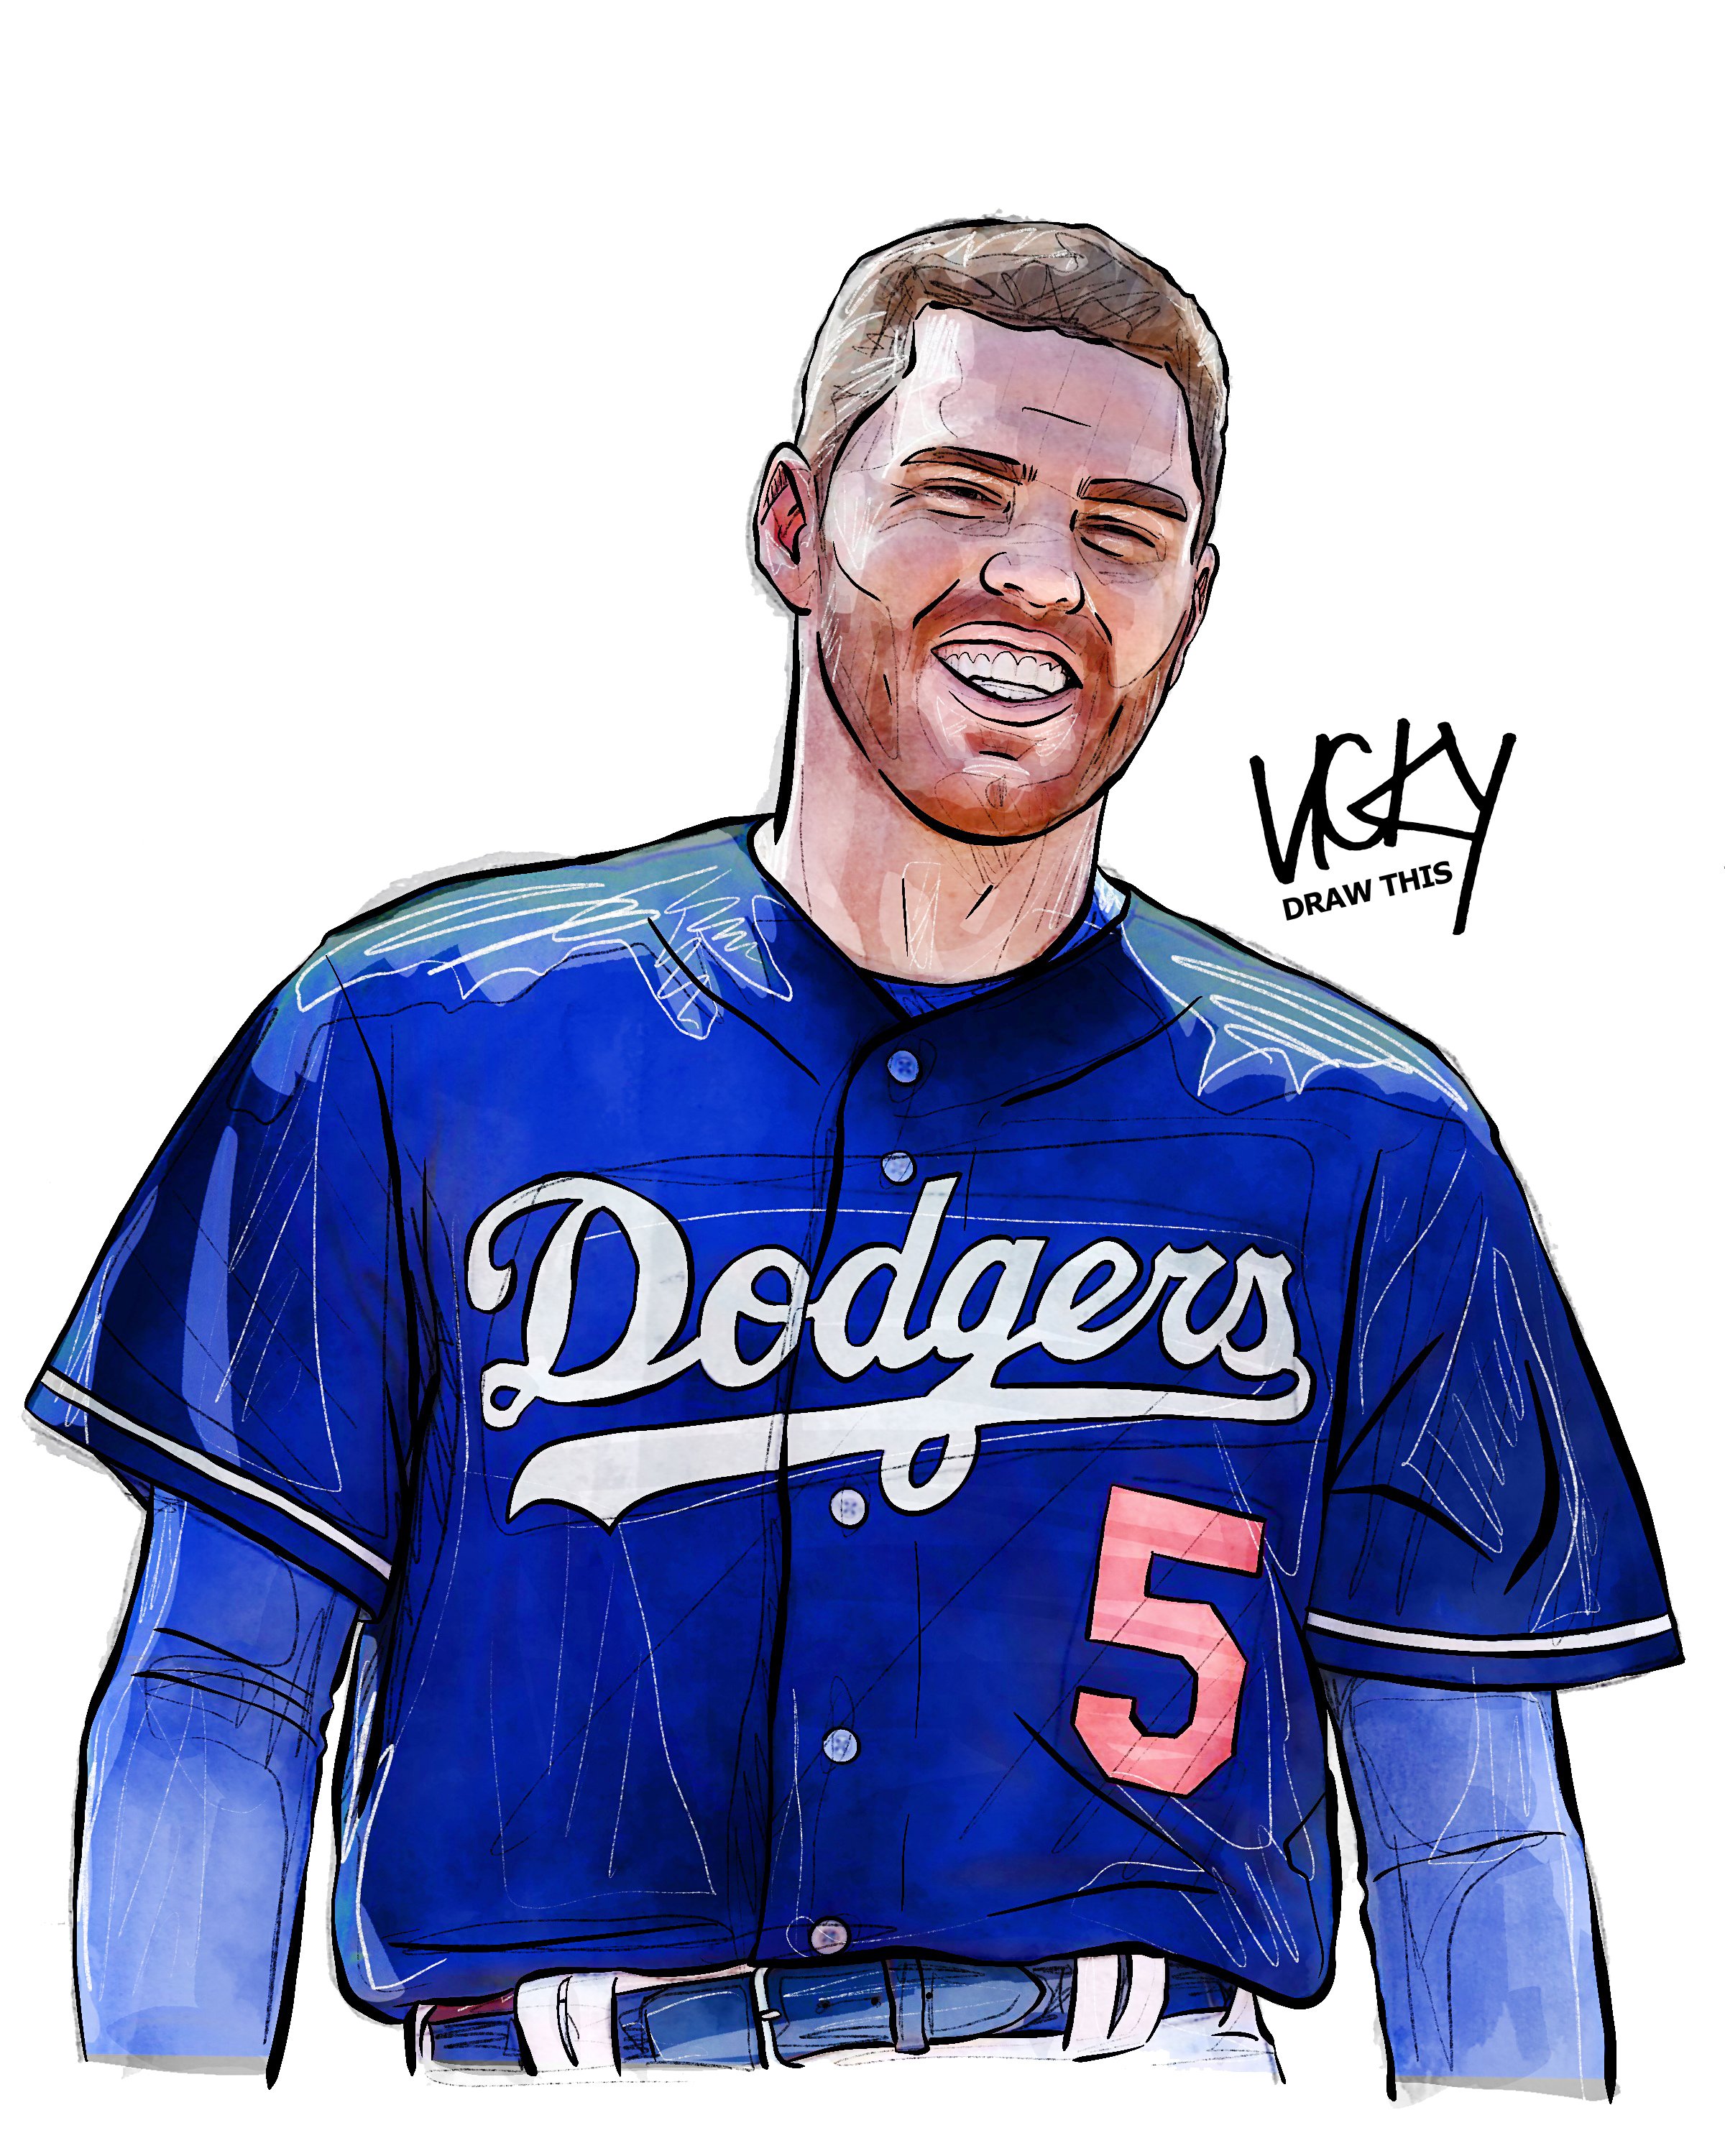 Freddie Freeman Dodgers — Vicky Draw This